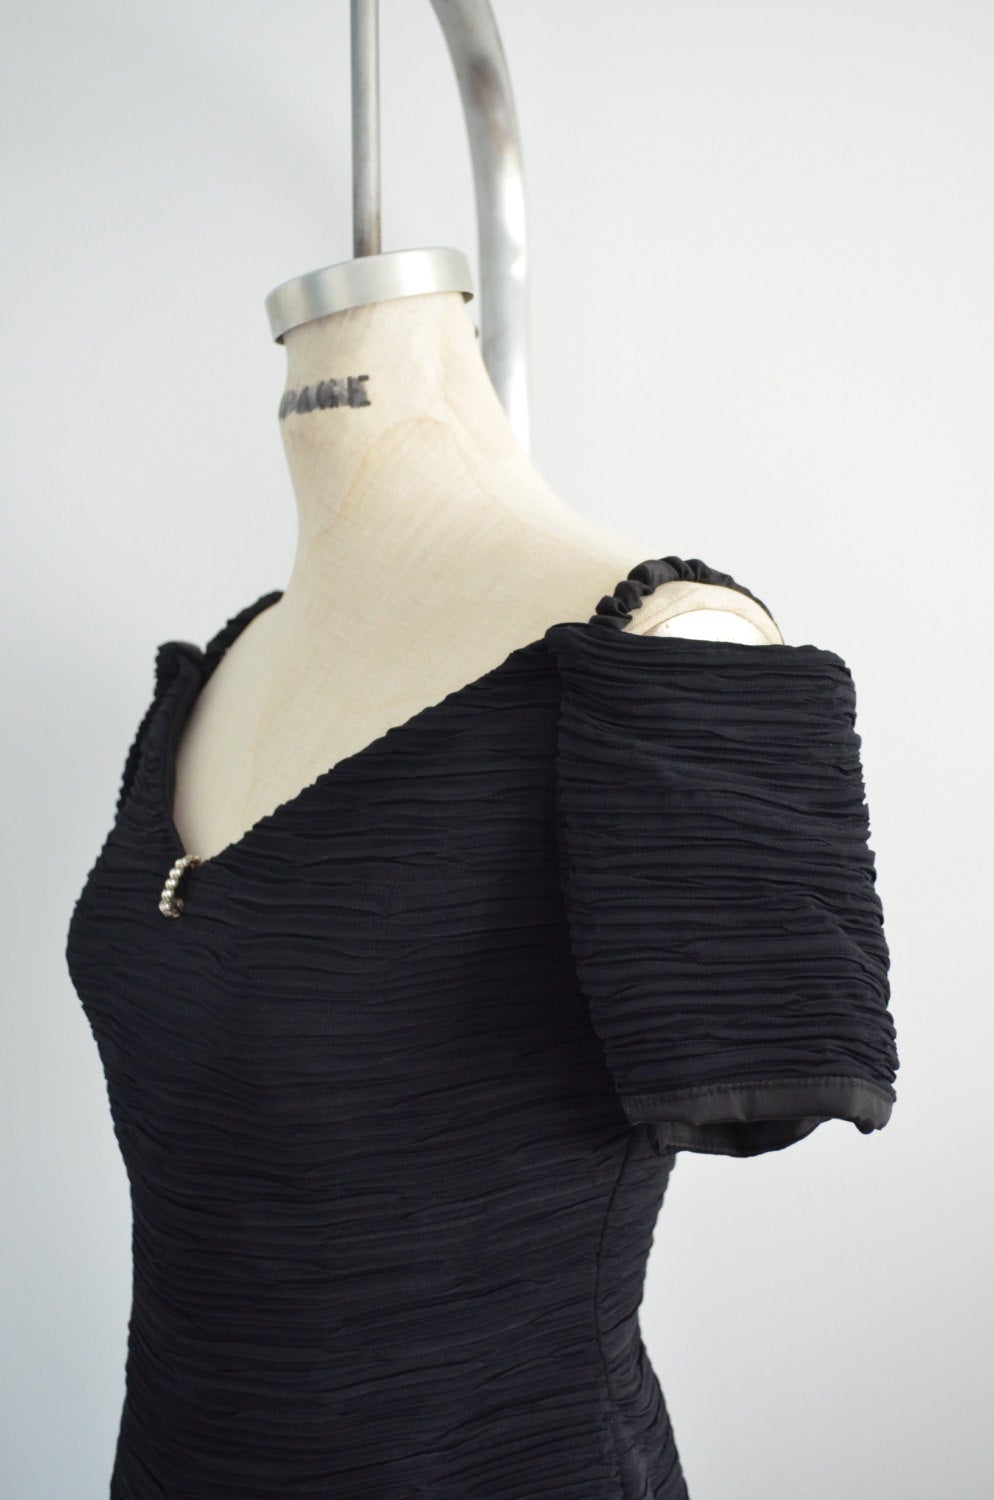 Mad Men Black Crinkled Pleated Fabric Off The Shoulder Cocktail Dress